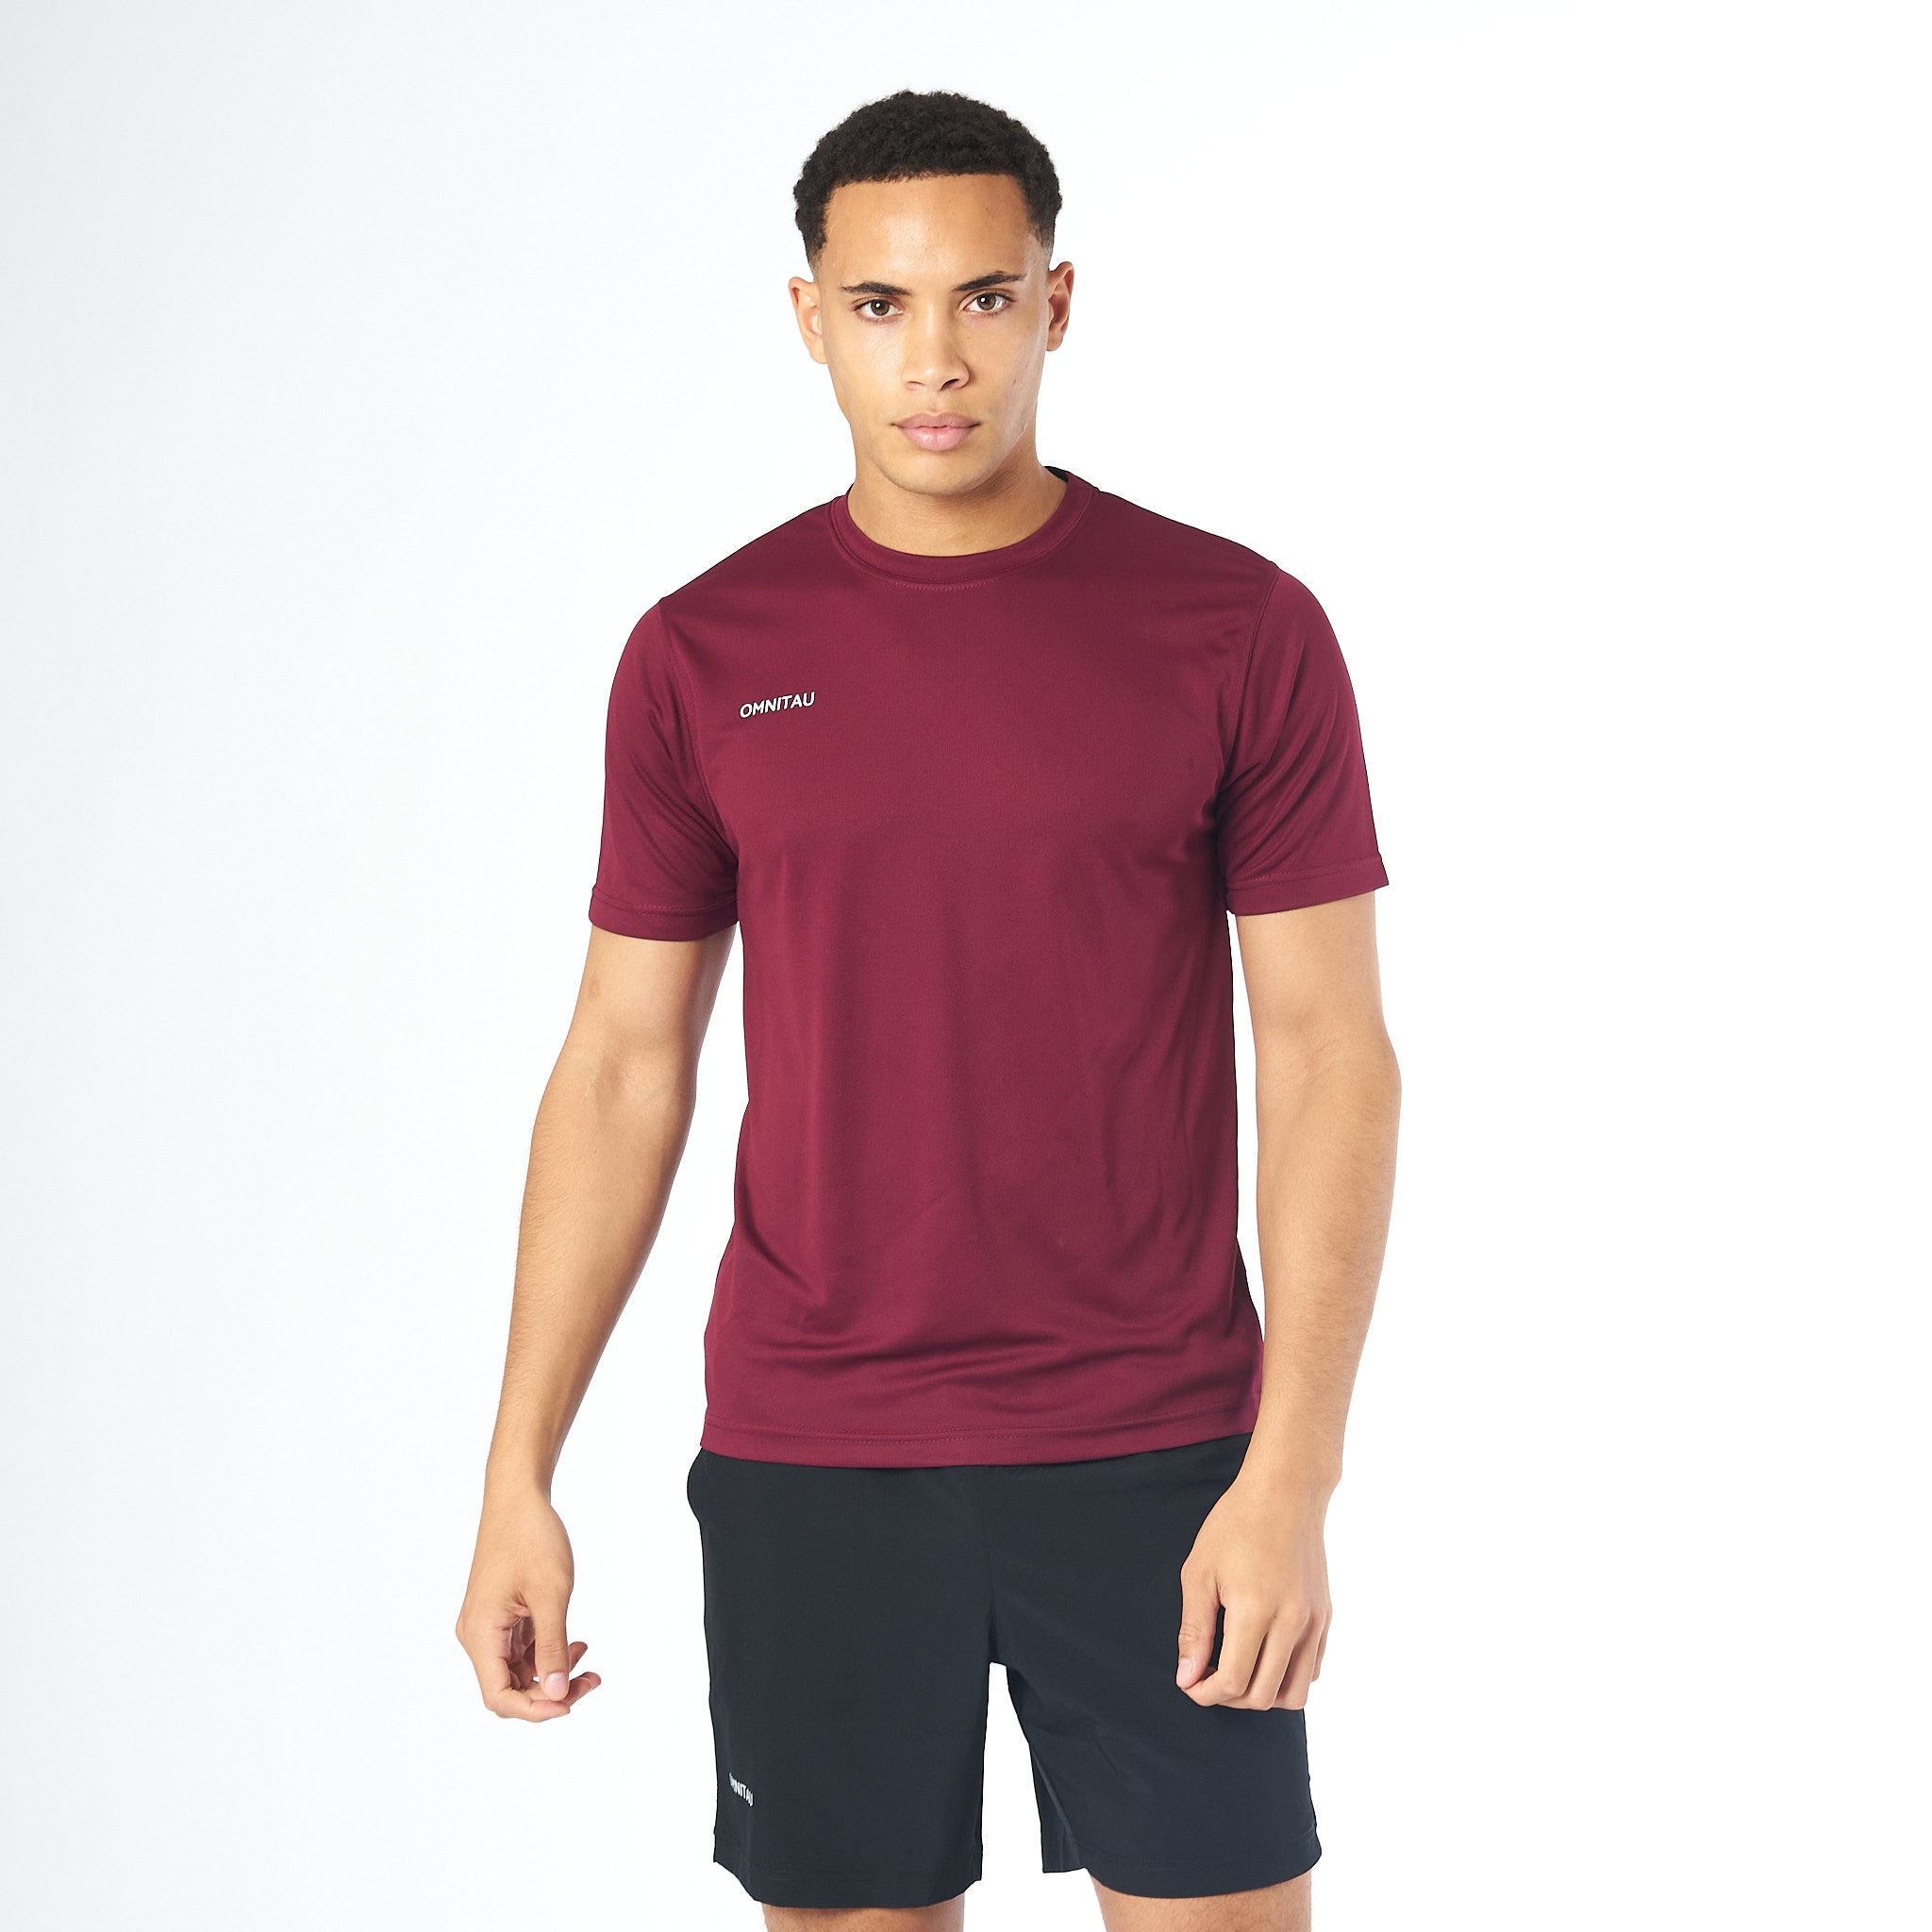 Omnitau Men's Team Sports Core Football Shirt - Burgundy